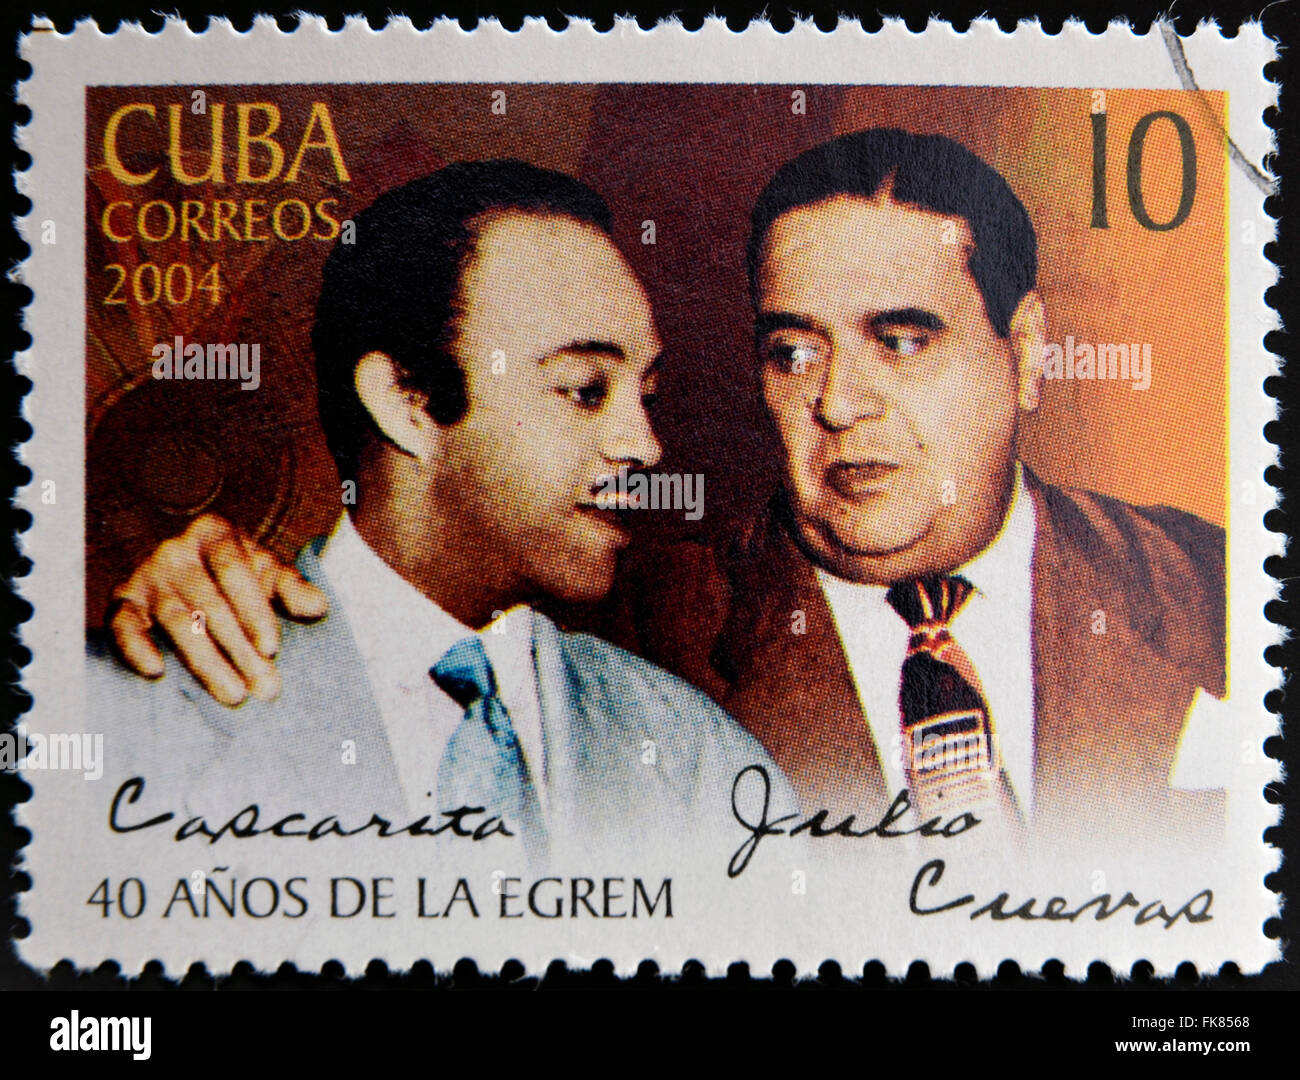 CUBA - circa 2004: un timbro stampato in cuba mostra Julio Cueva y Orlando Guerra, Cascarita, circa 2004 Foto Stock